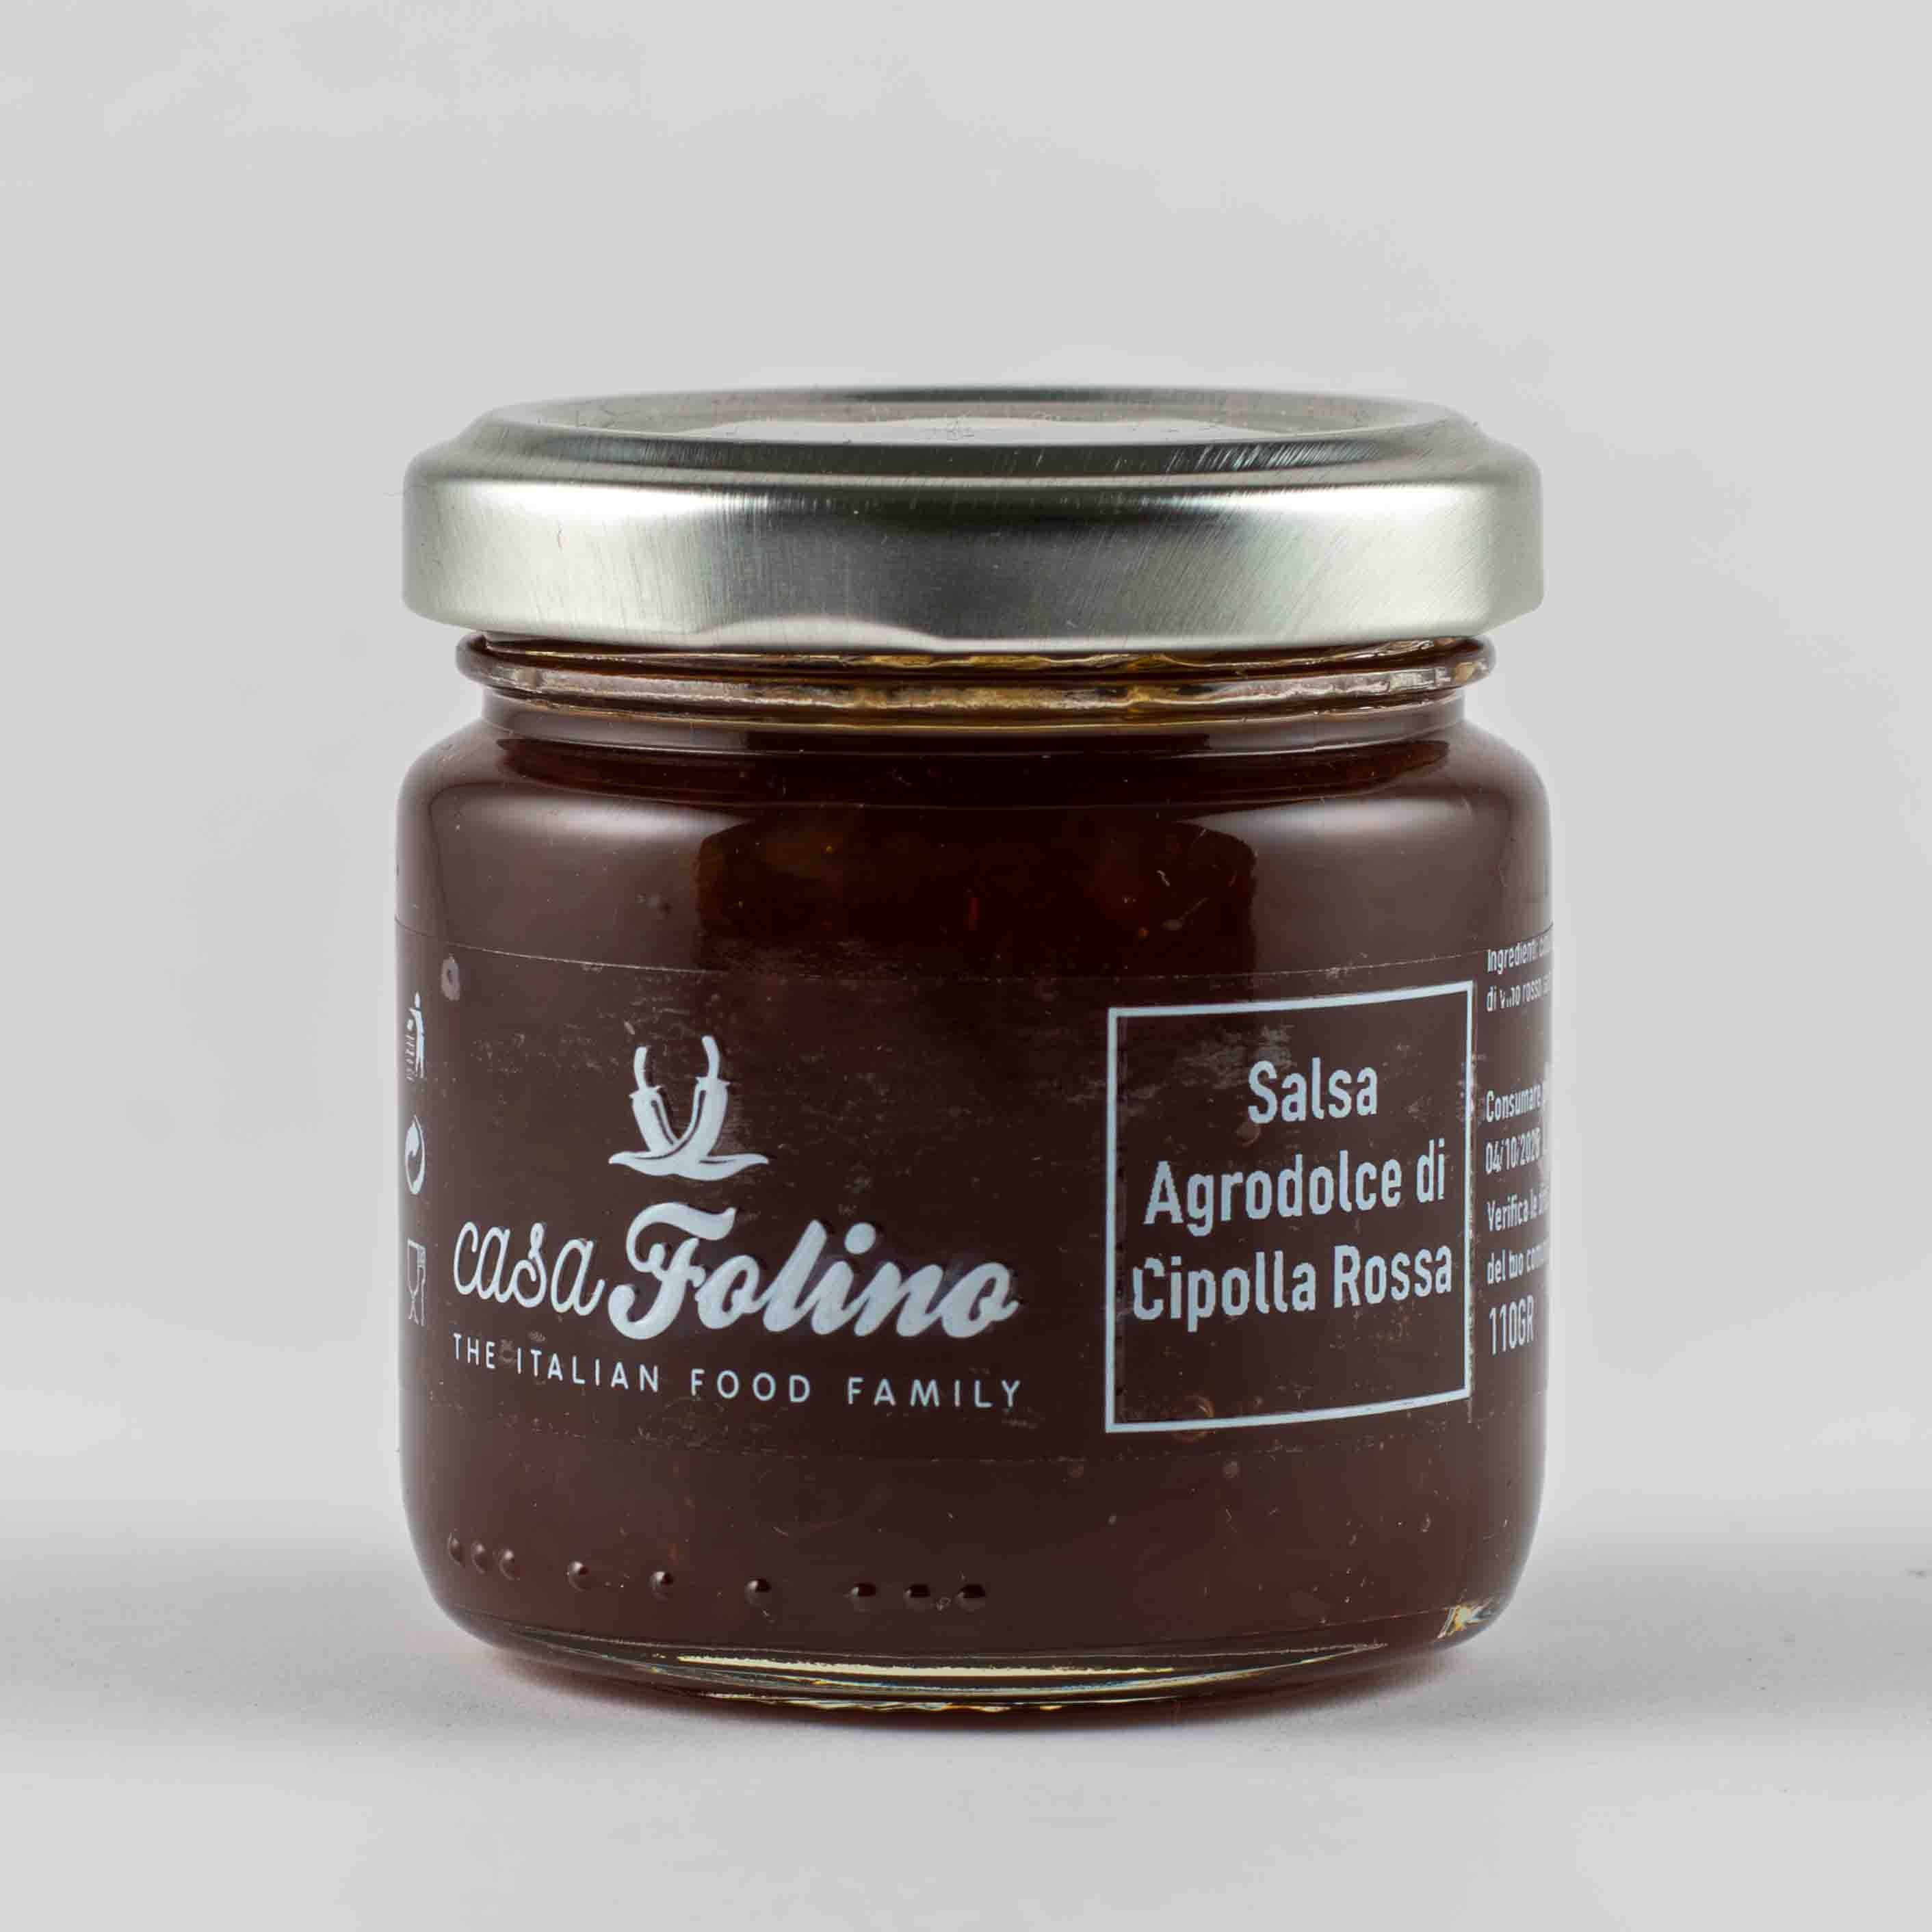 Salsa Agrodolce di Cipolla Rossa 110 gr - Casafolino.com